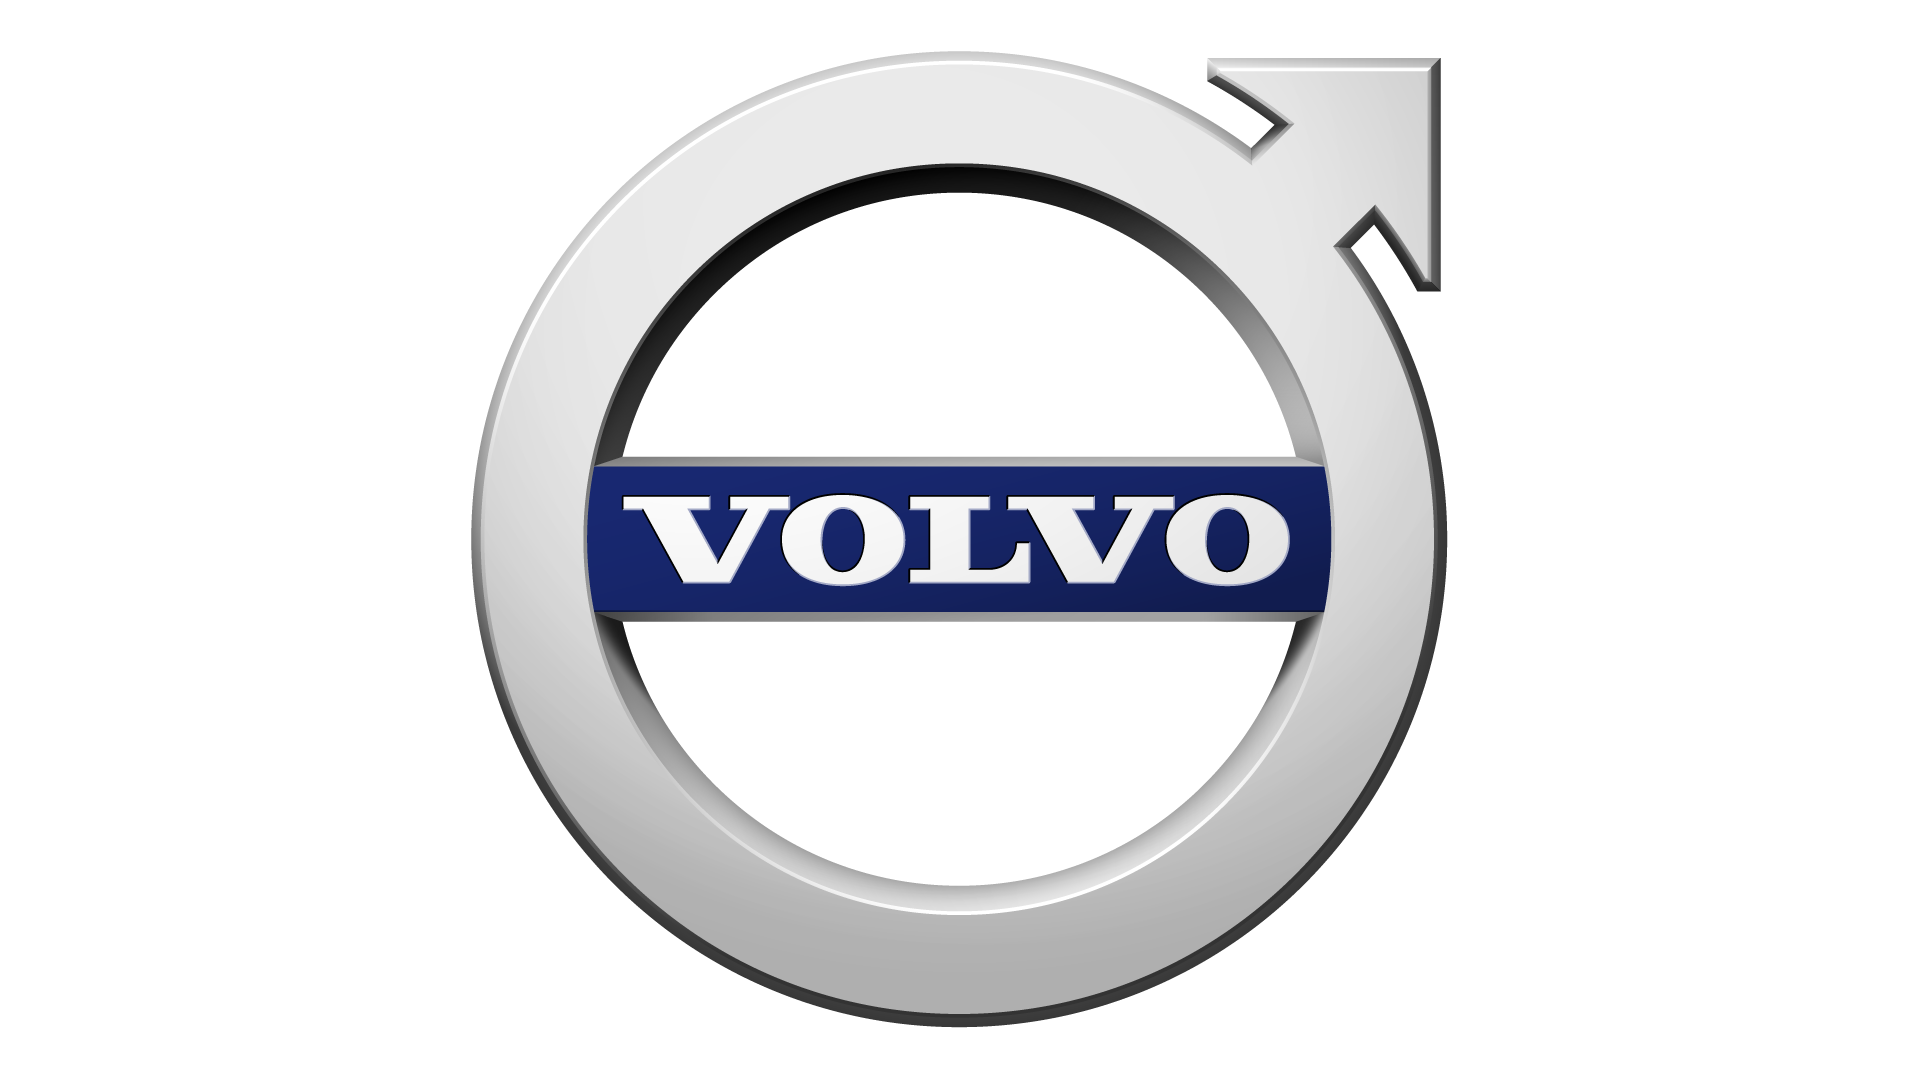 volvo-logo-2014-1920x1080.png